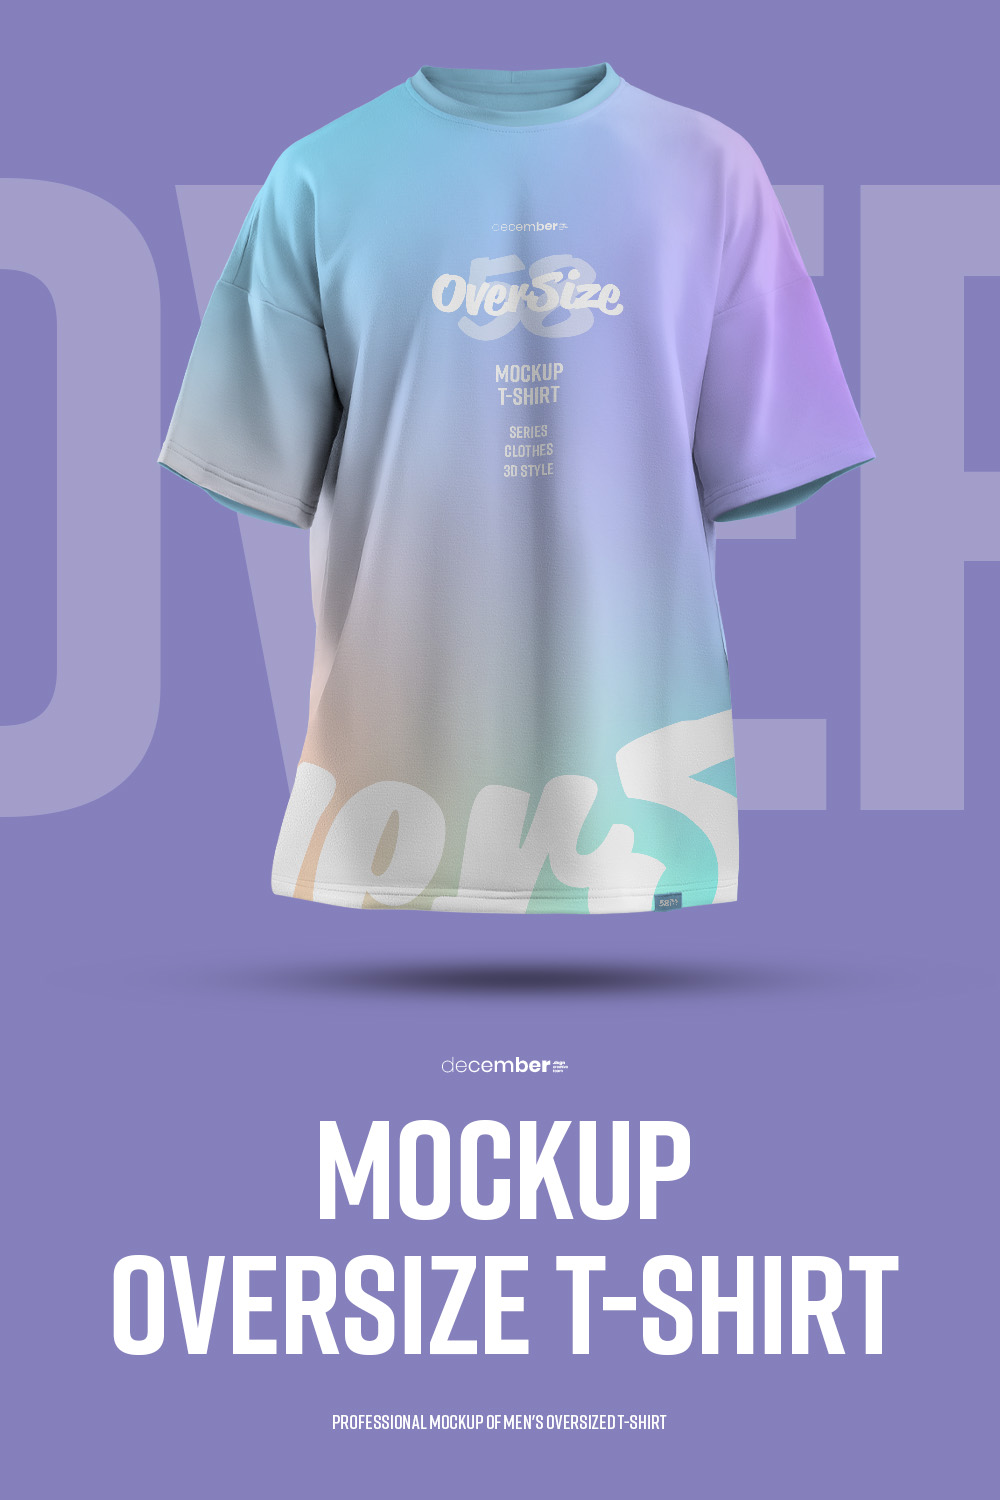 9 Mockups Oversize T-shirt pinterest image.